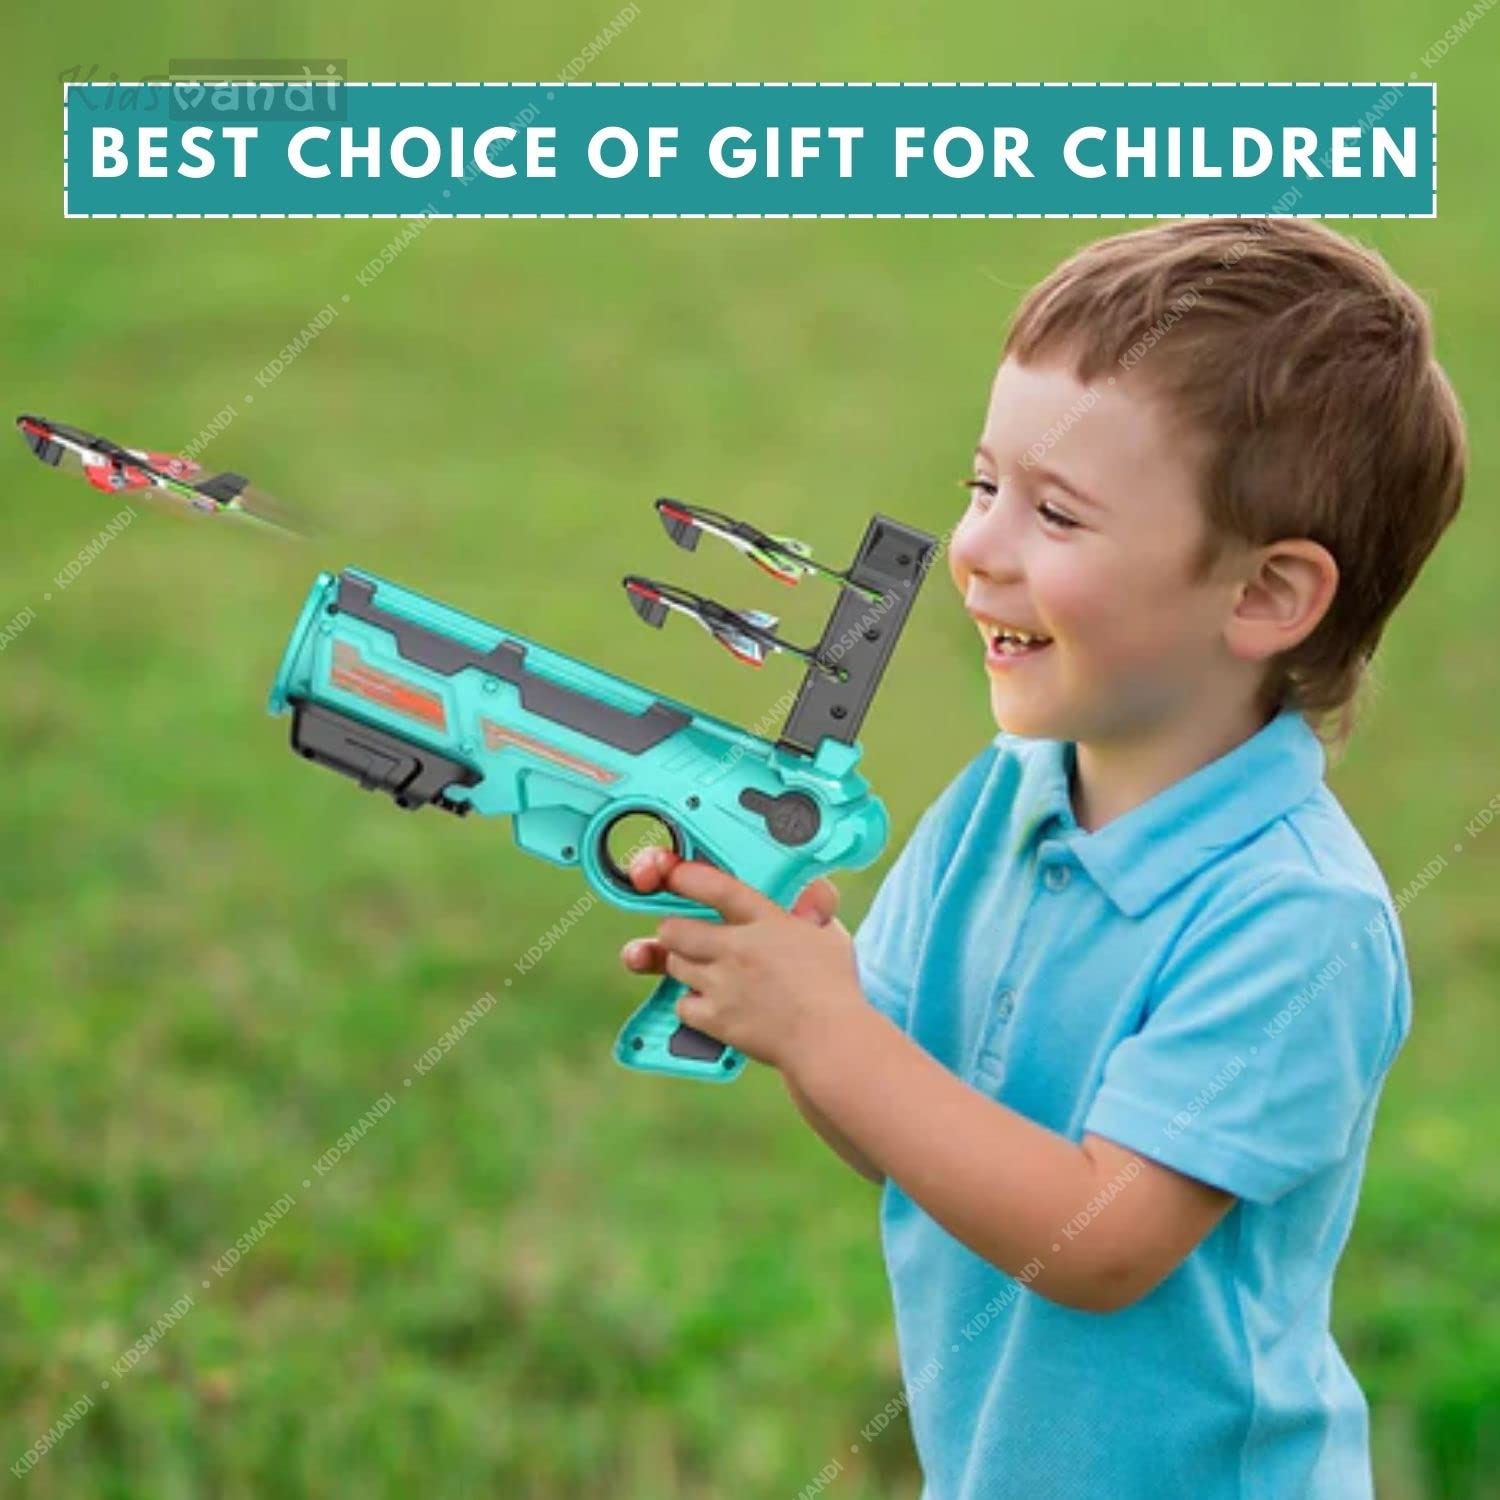 Kids Mandi airplane launcher toy gun for hours of fun.